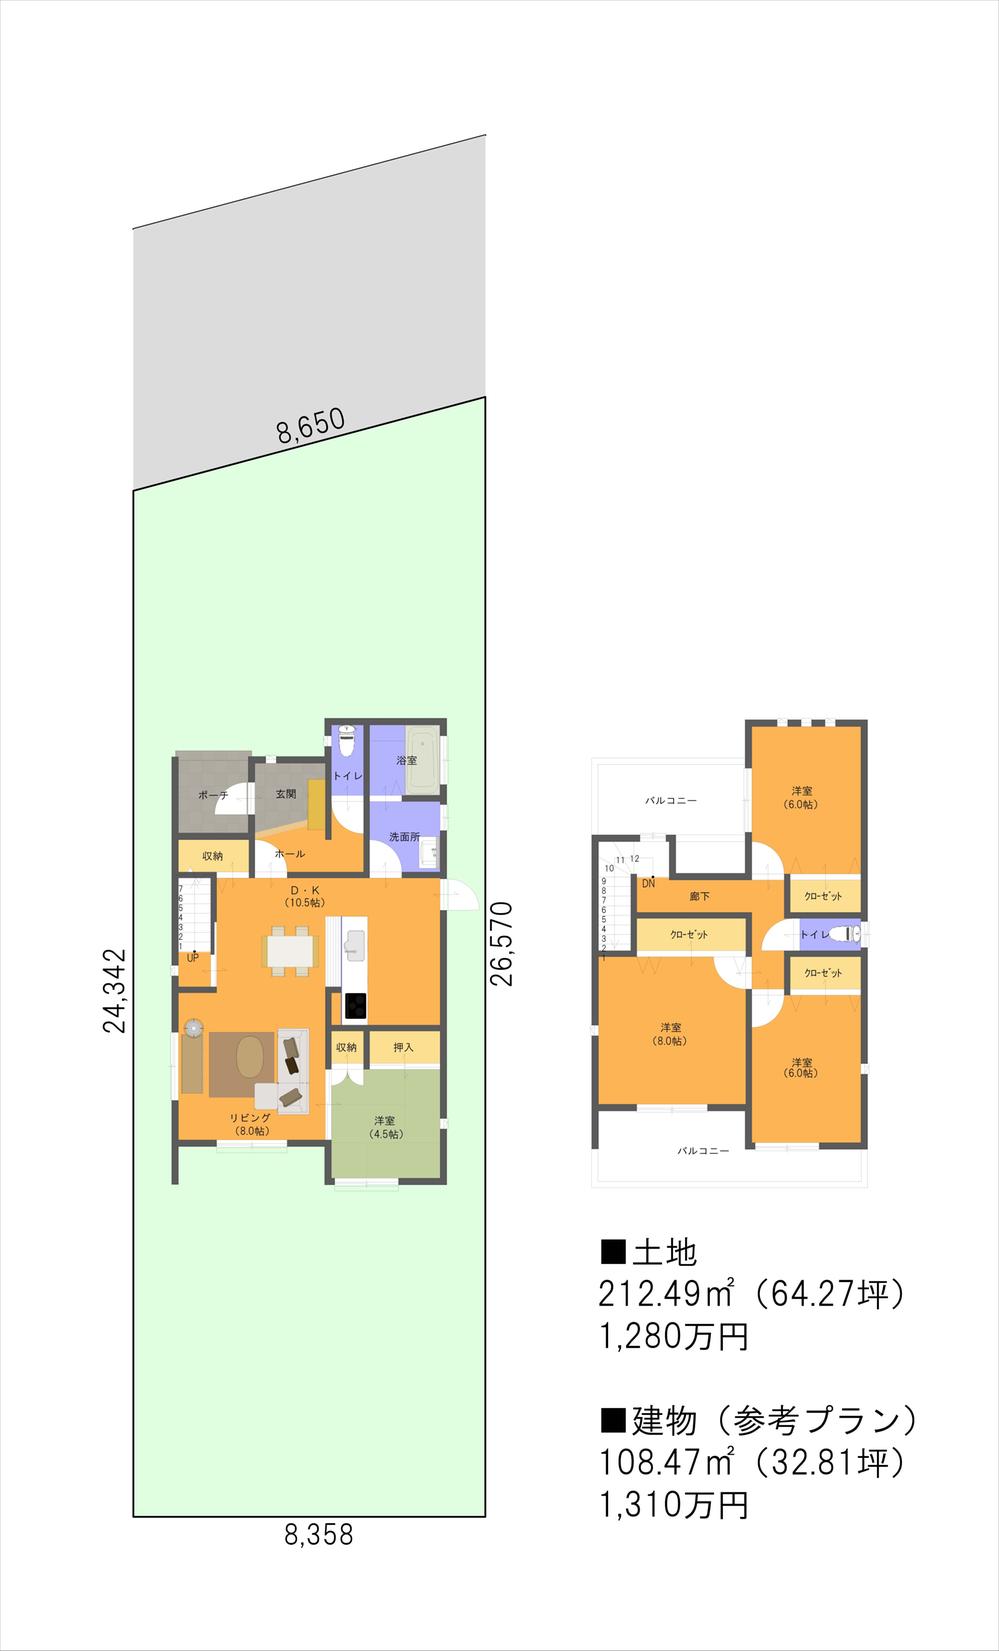 Building plan example (floor plan). Building plan example (C No. land) Building price 13.1 million yen, Building area 108.47 sq m